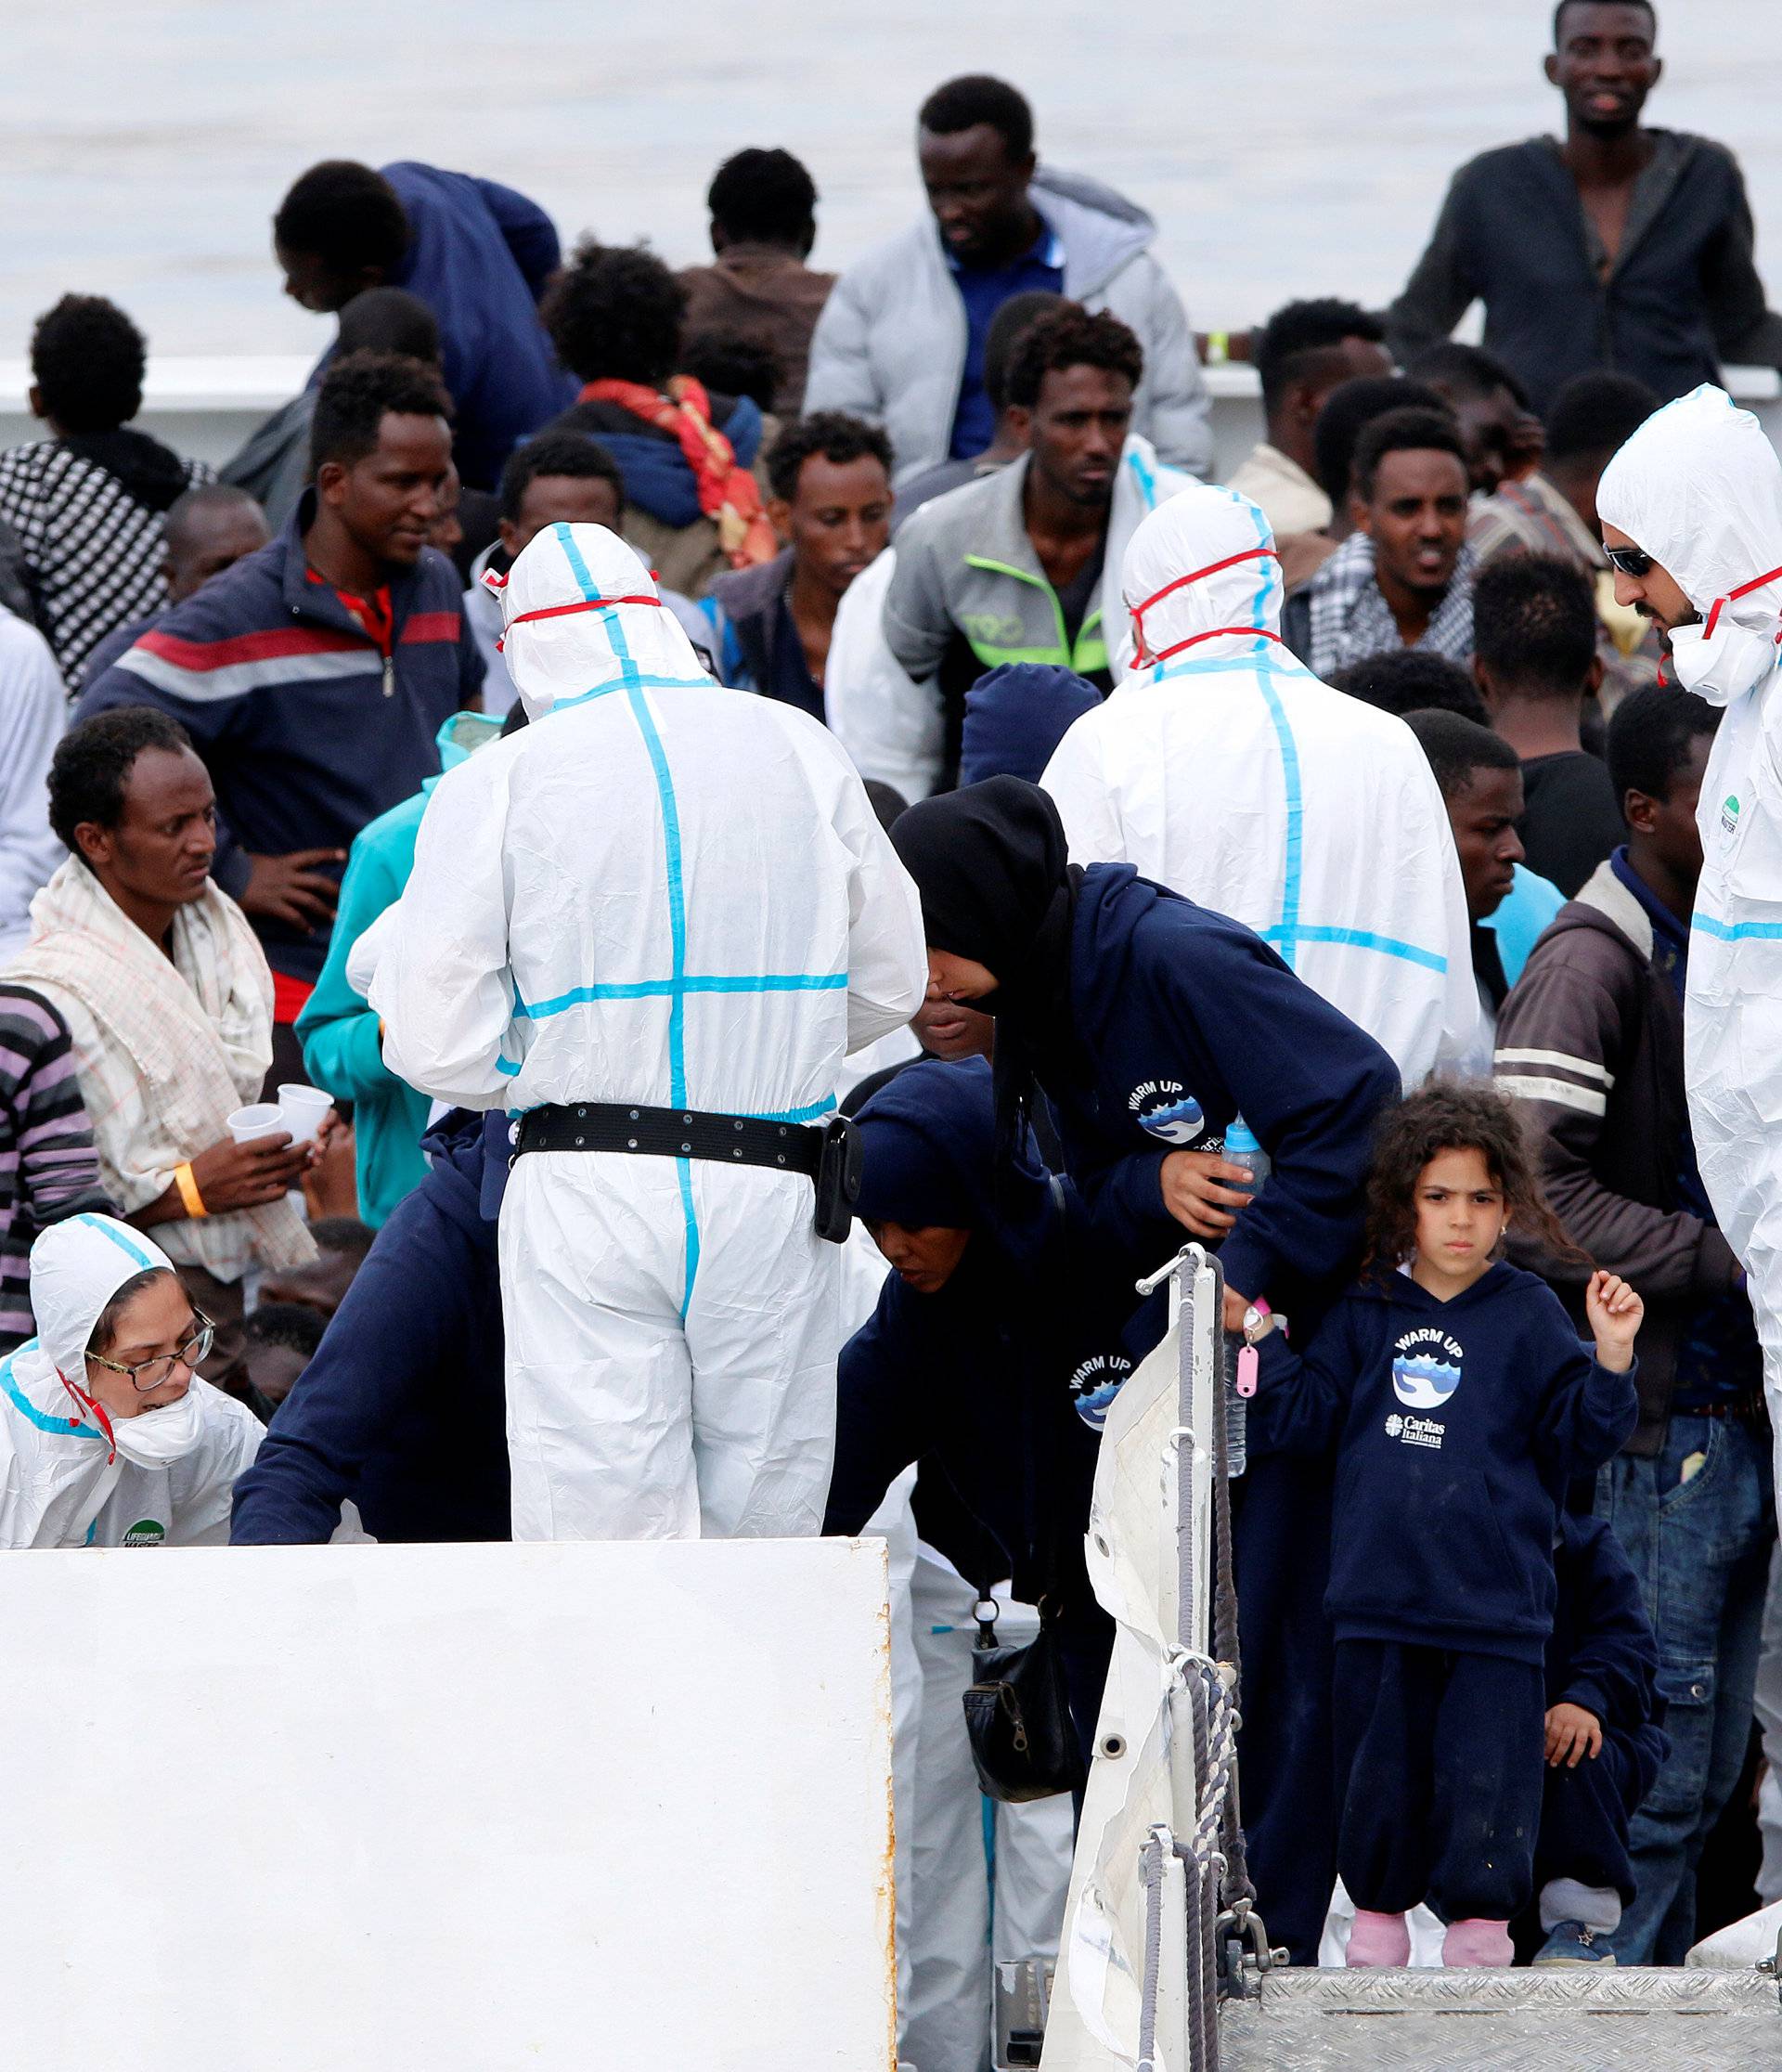 Migrants wait to disembark the Italian coast guard vessel "Diciotti" as they arrive at the port of Catania